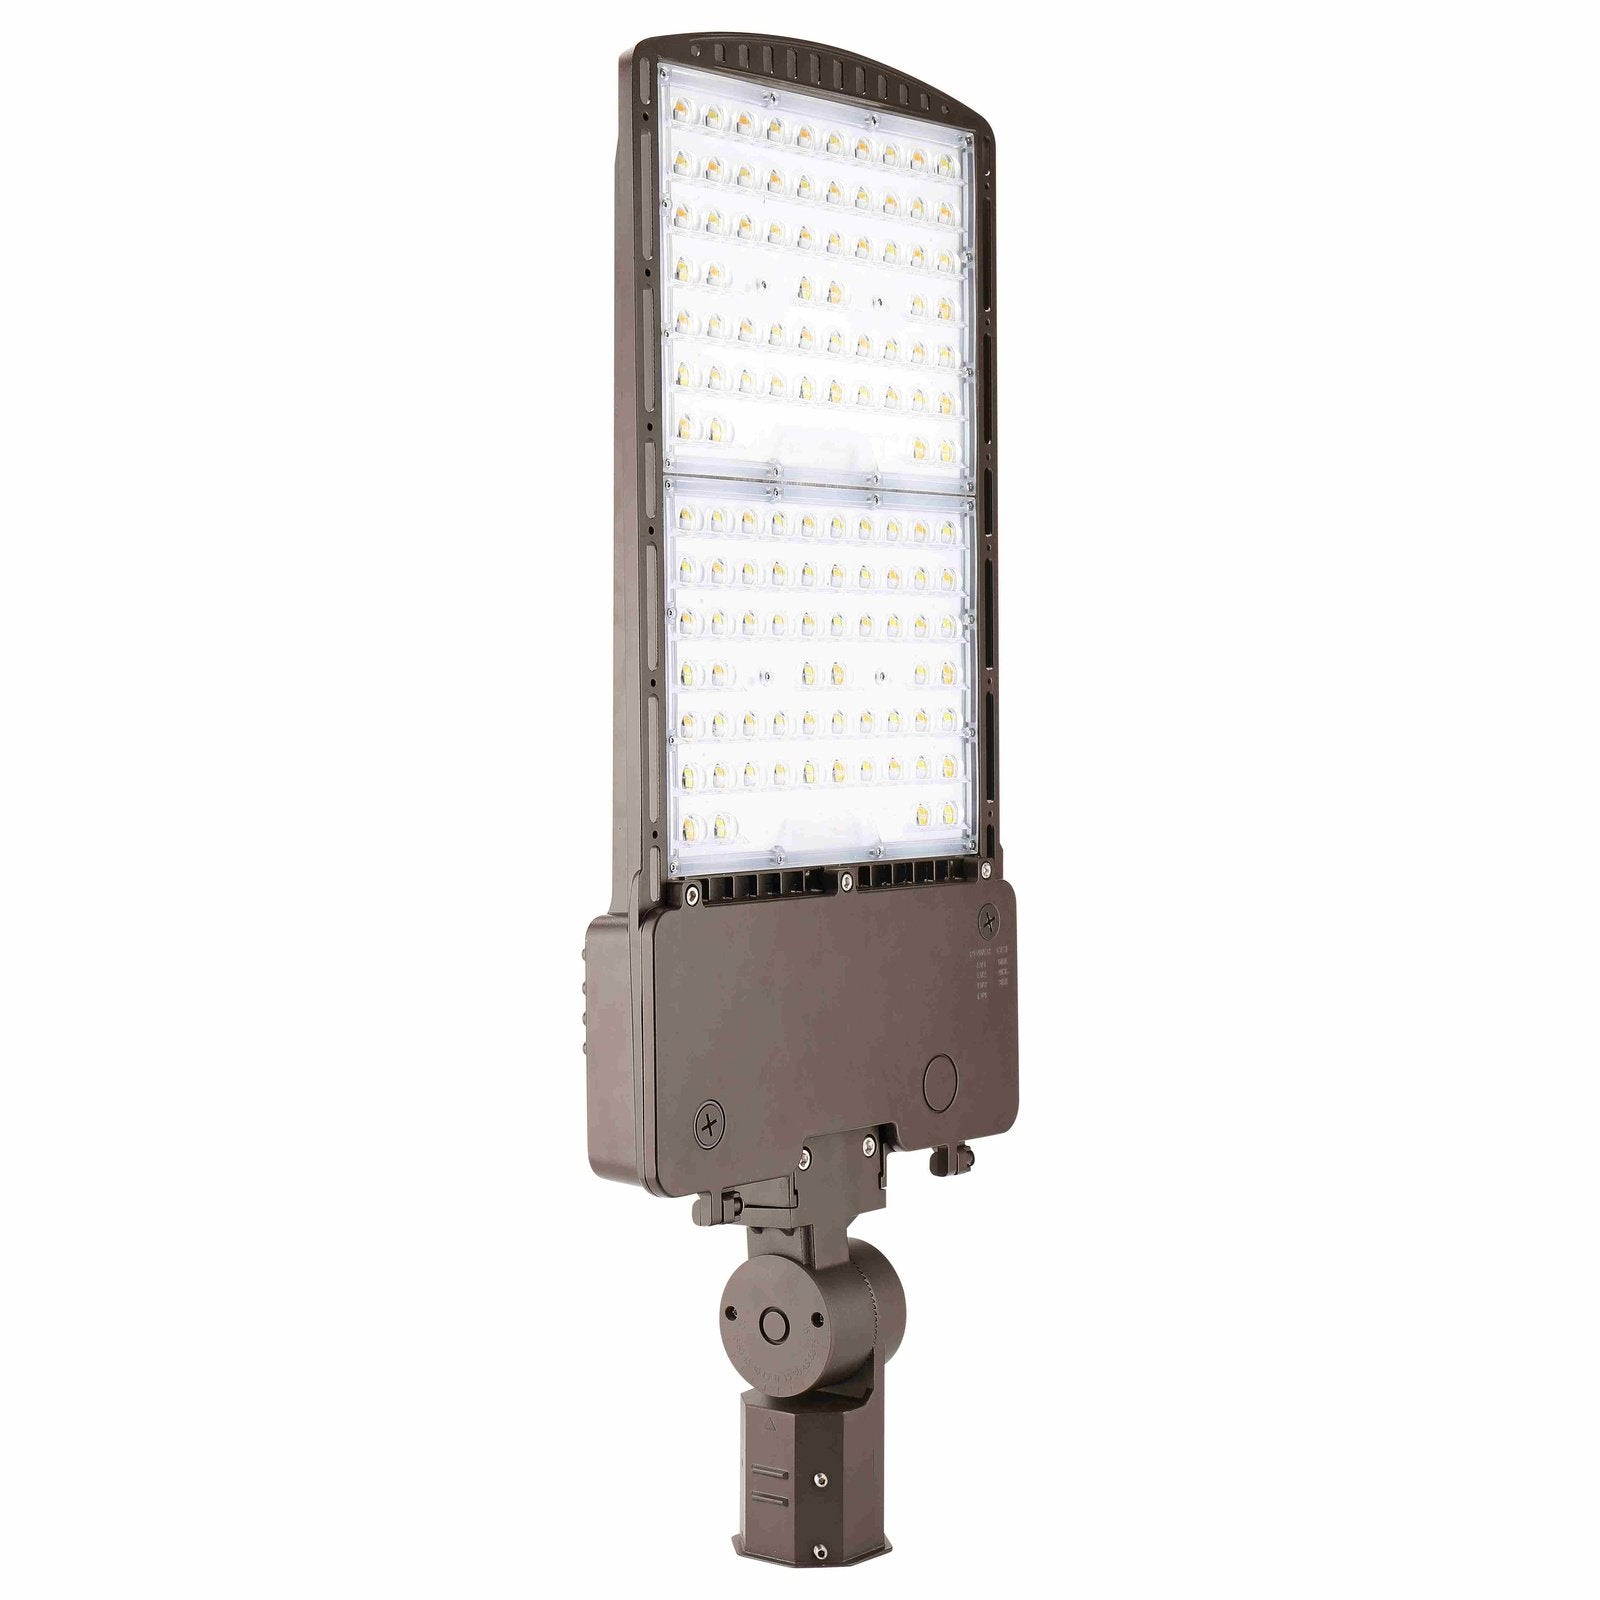 AL08 LED Area Flood Light 300W 42000 Lumens 120-277VAC Type 3, CCT Selectable 5000K/4000K/3000K and Power Adjustable) - Dark Bronze